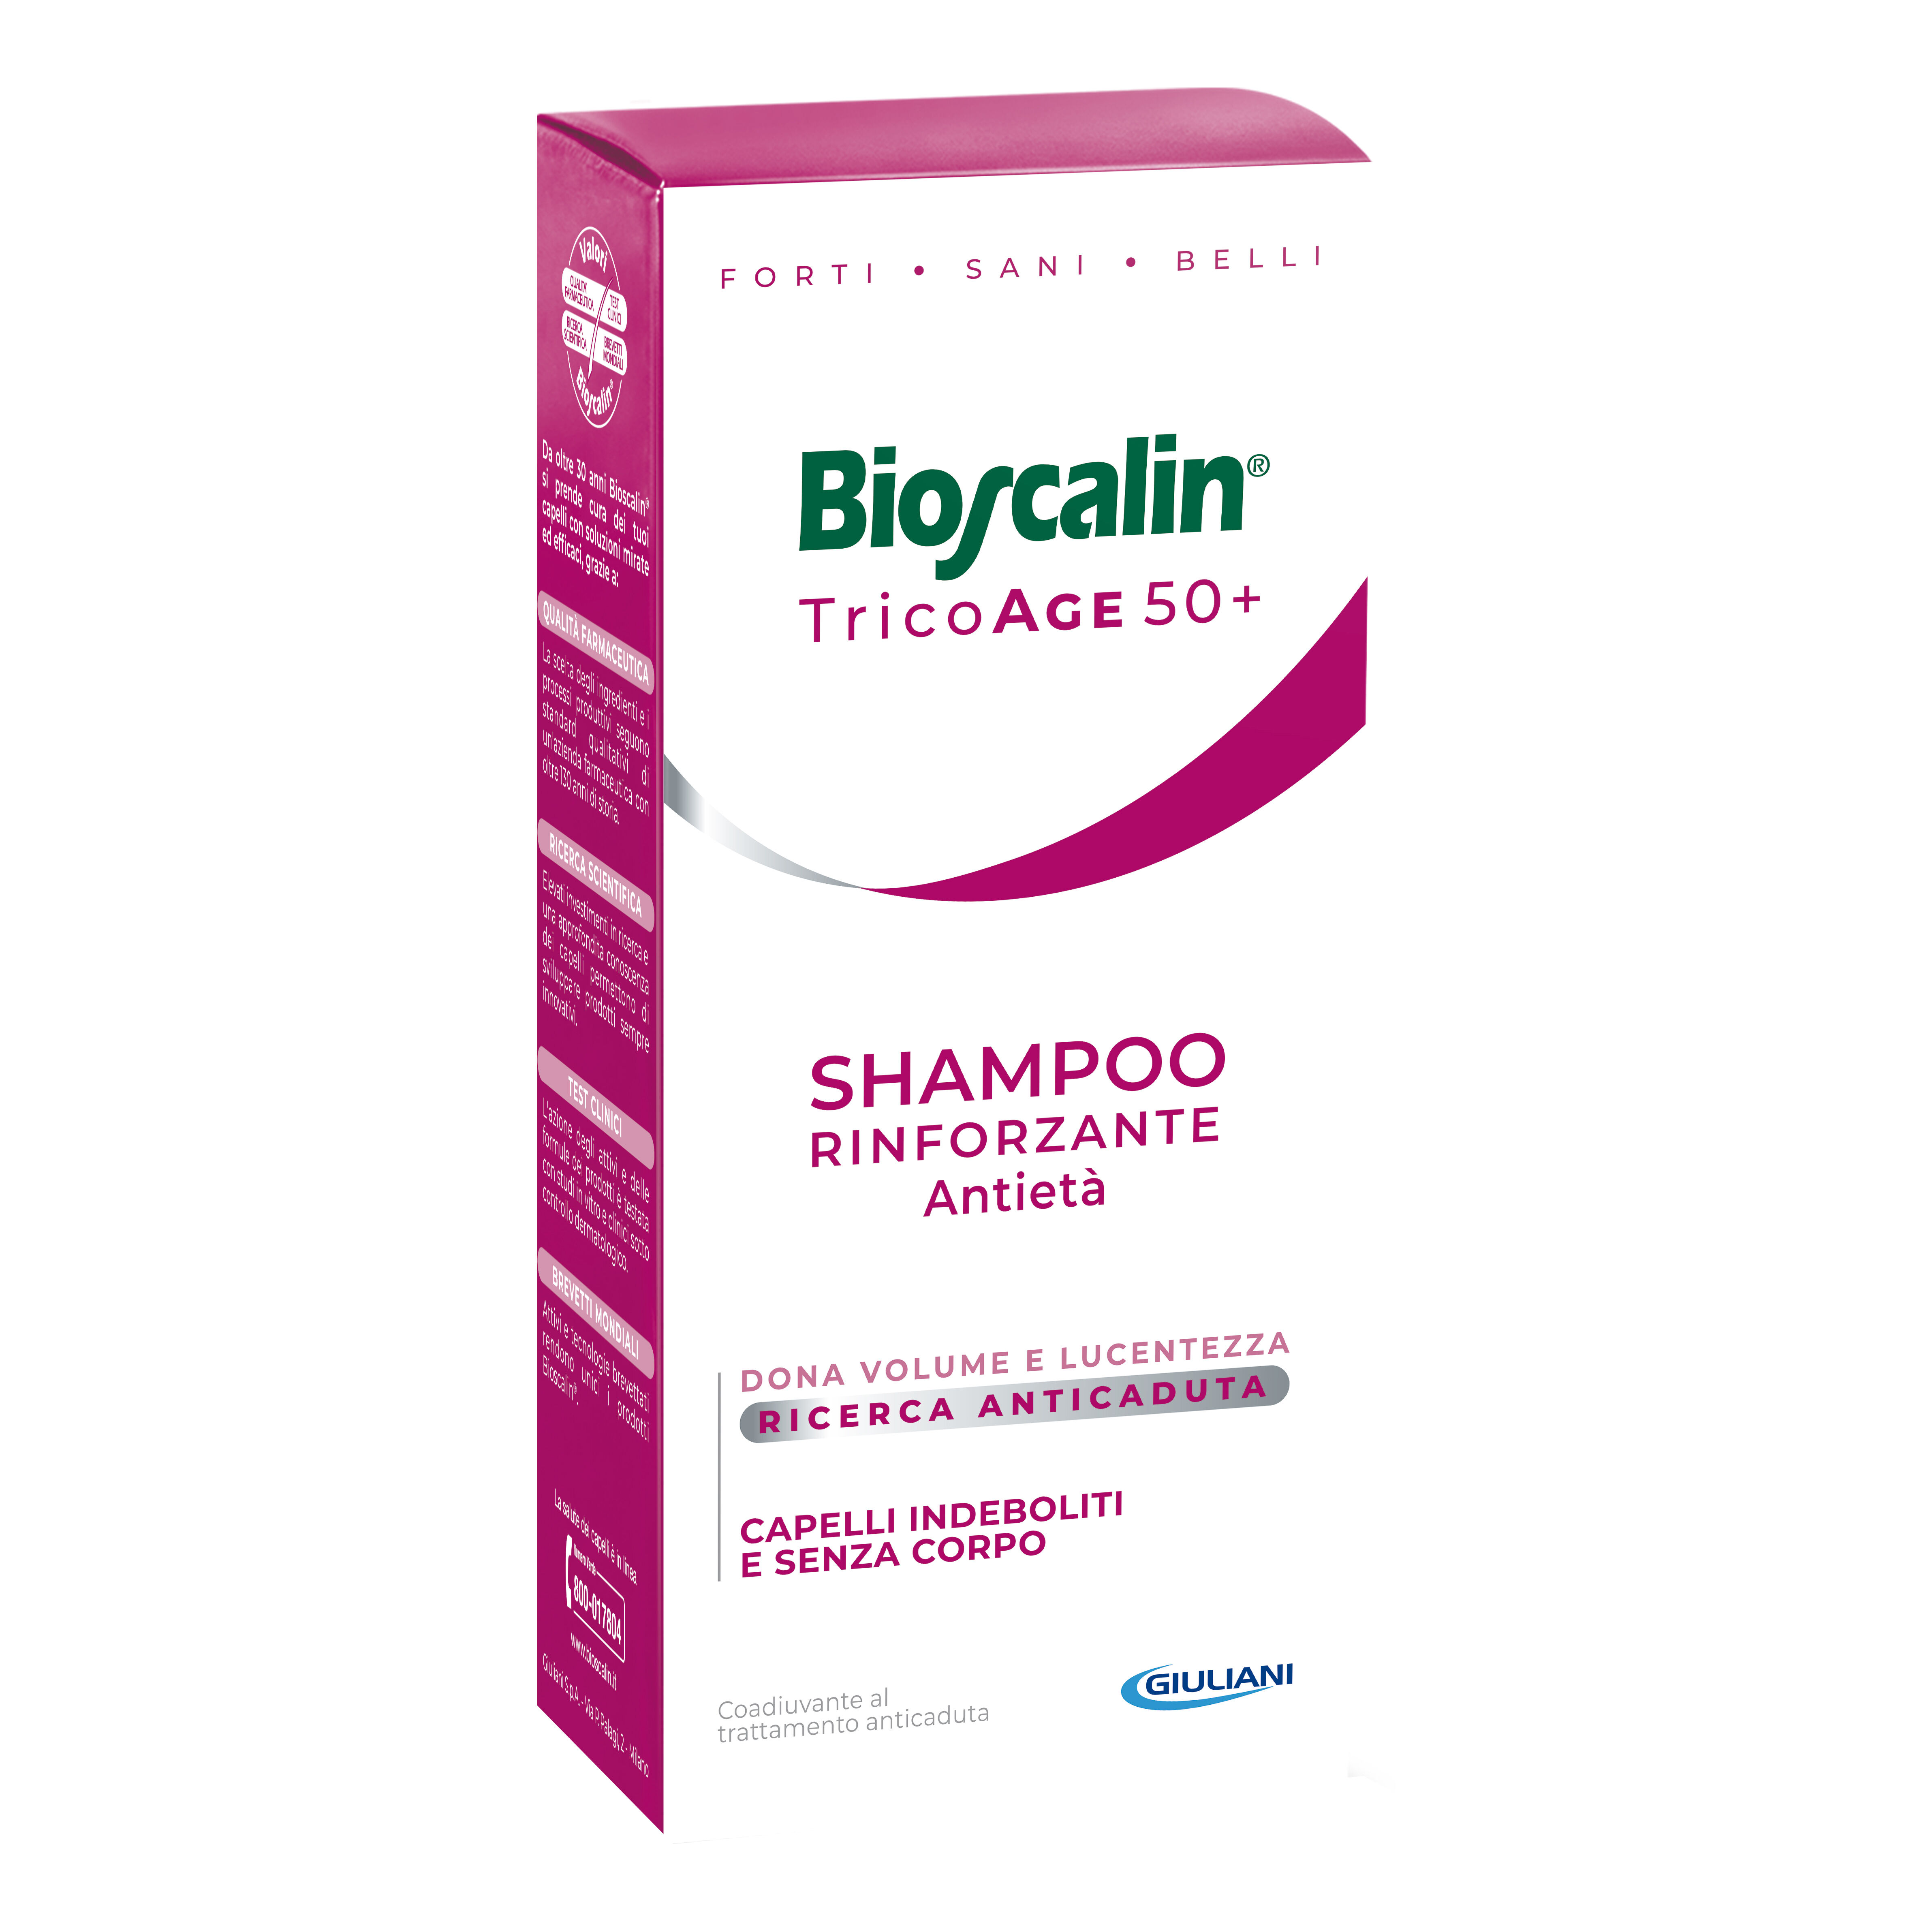 Bioscalin shampoo rinforzante antieta' 200 ml